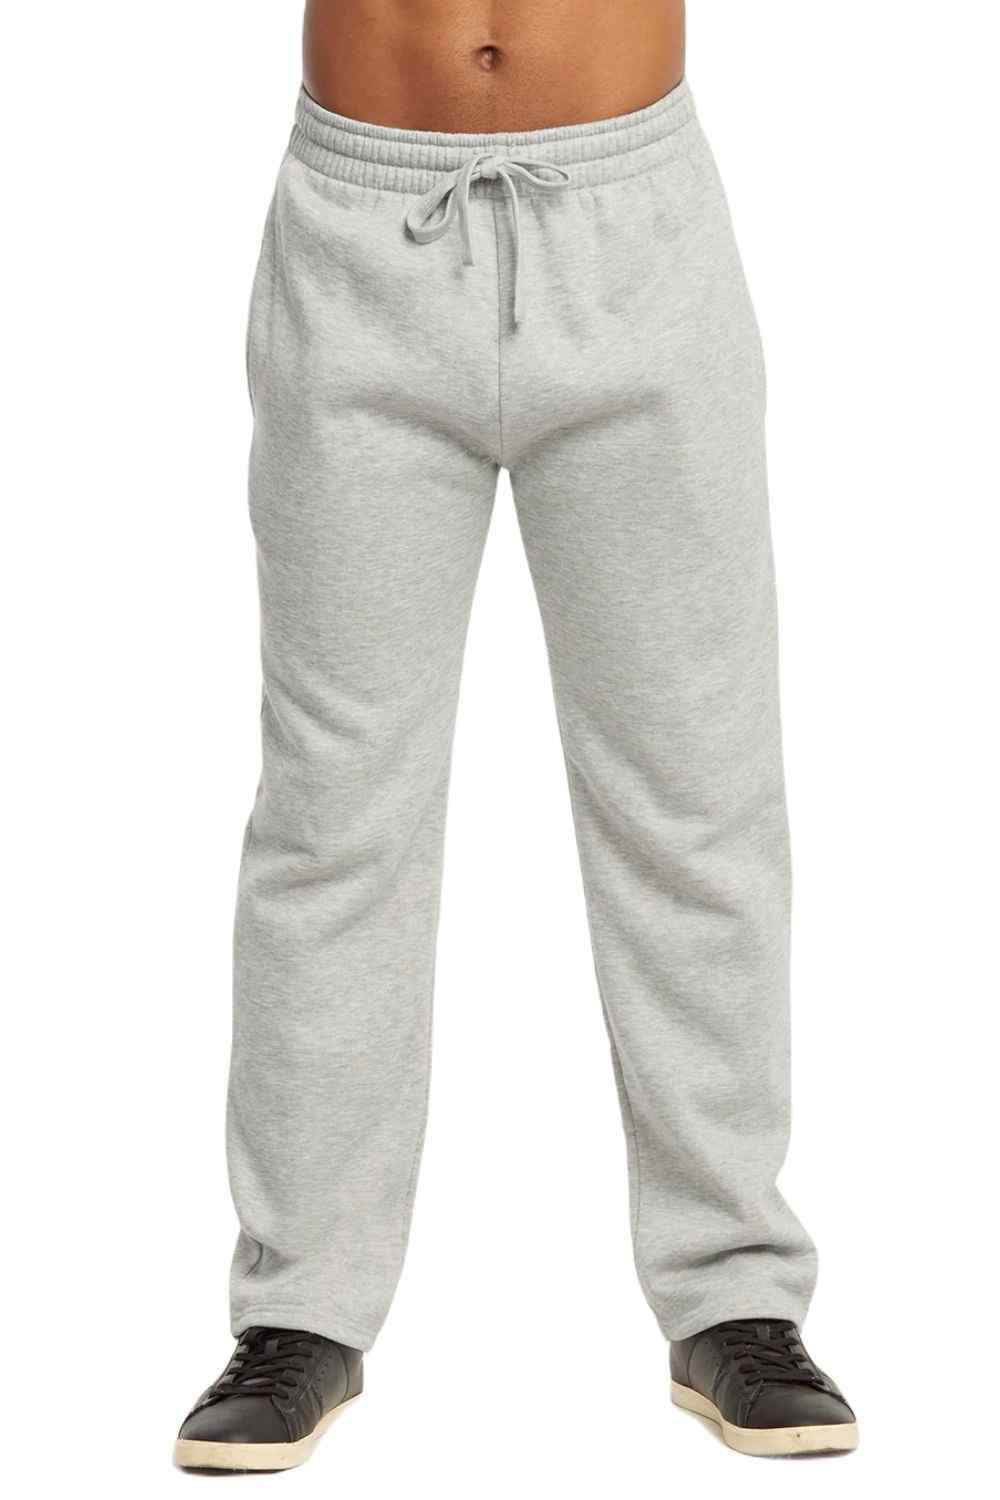 Men's Medium Weight Fleece Open Bottom Sweatpants with Pockets, Heather Grey  M, 1 Pack 